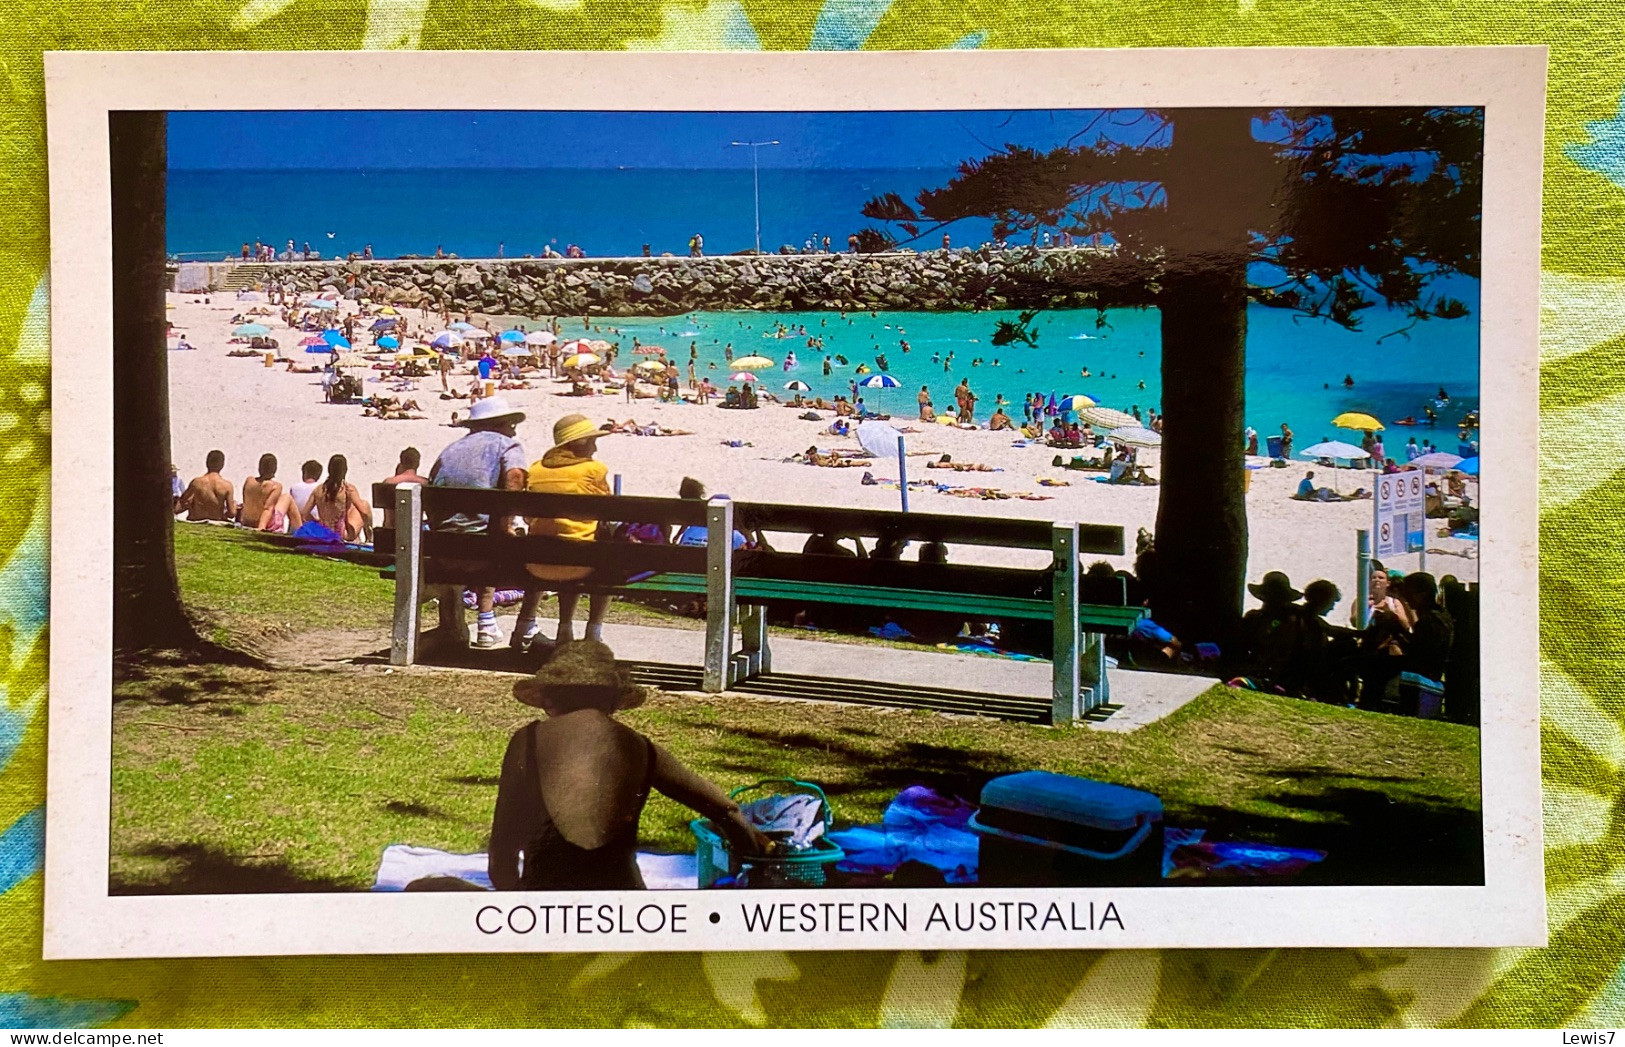 Perth - Cottesloe Beach - Western Australia - Perth